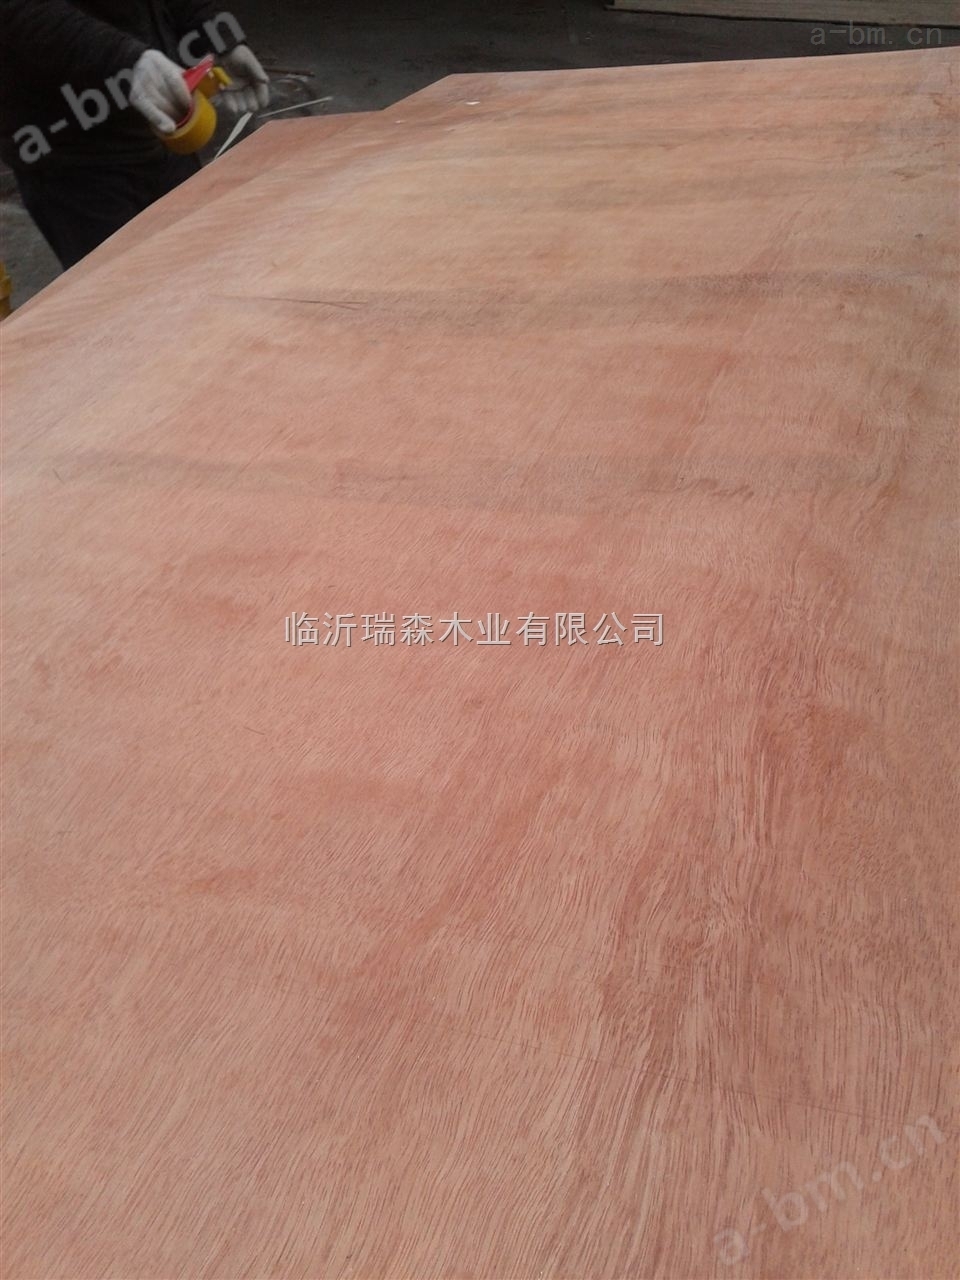 E0级12mm多层胶合板家具木板三夹板材实木包装板门板